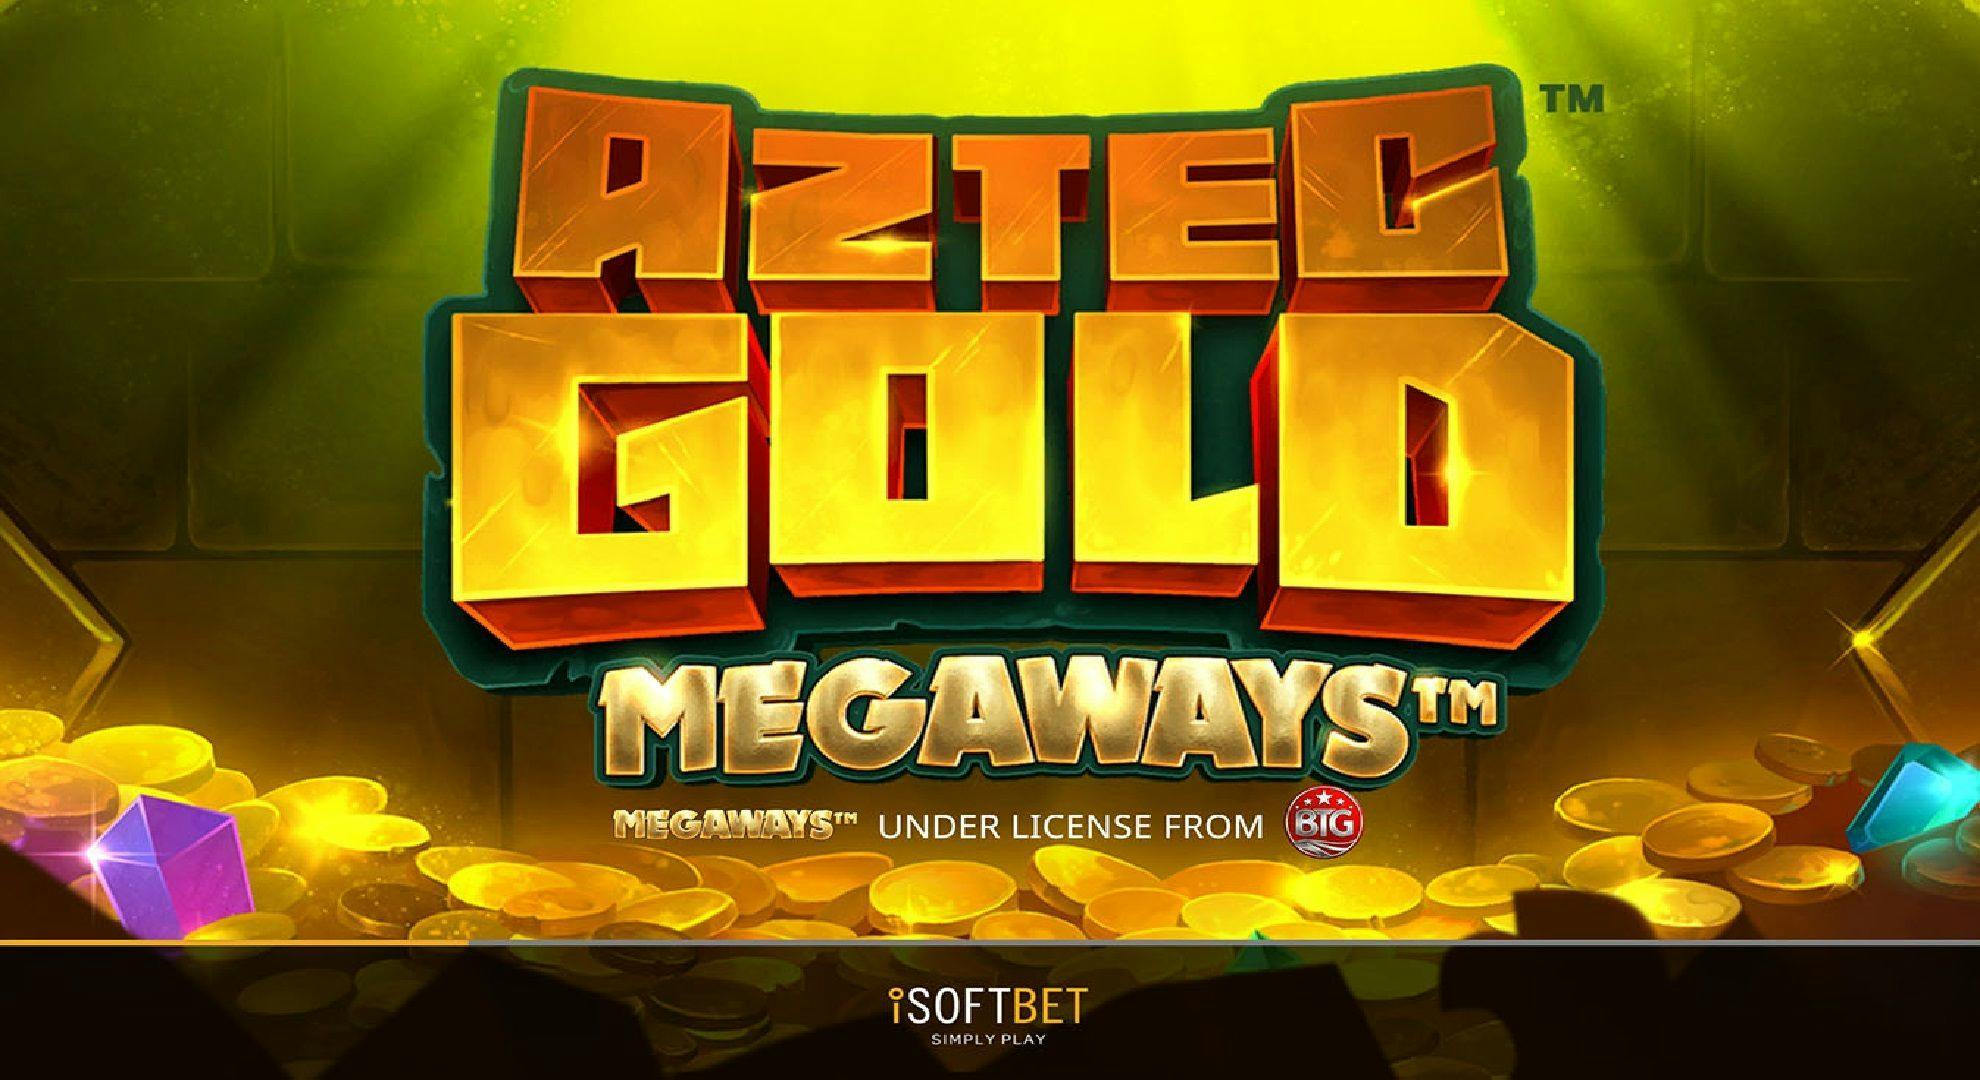 Aztec Gold Megaways Slot Online Free Play